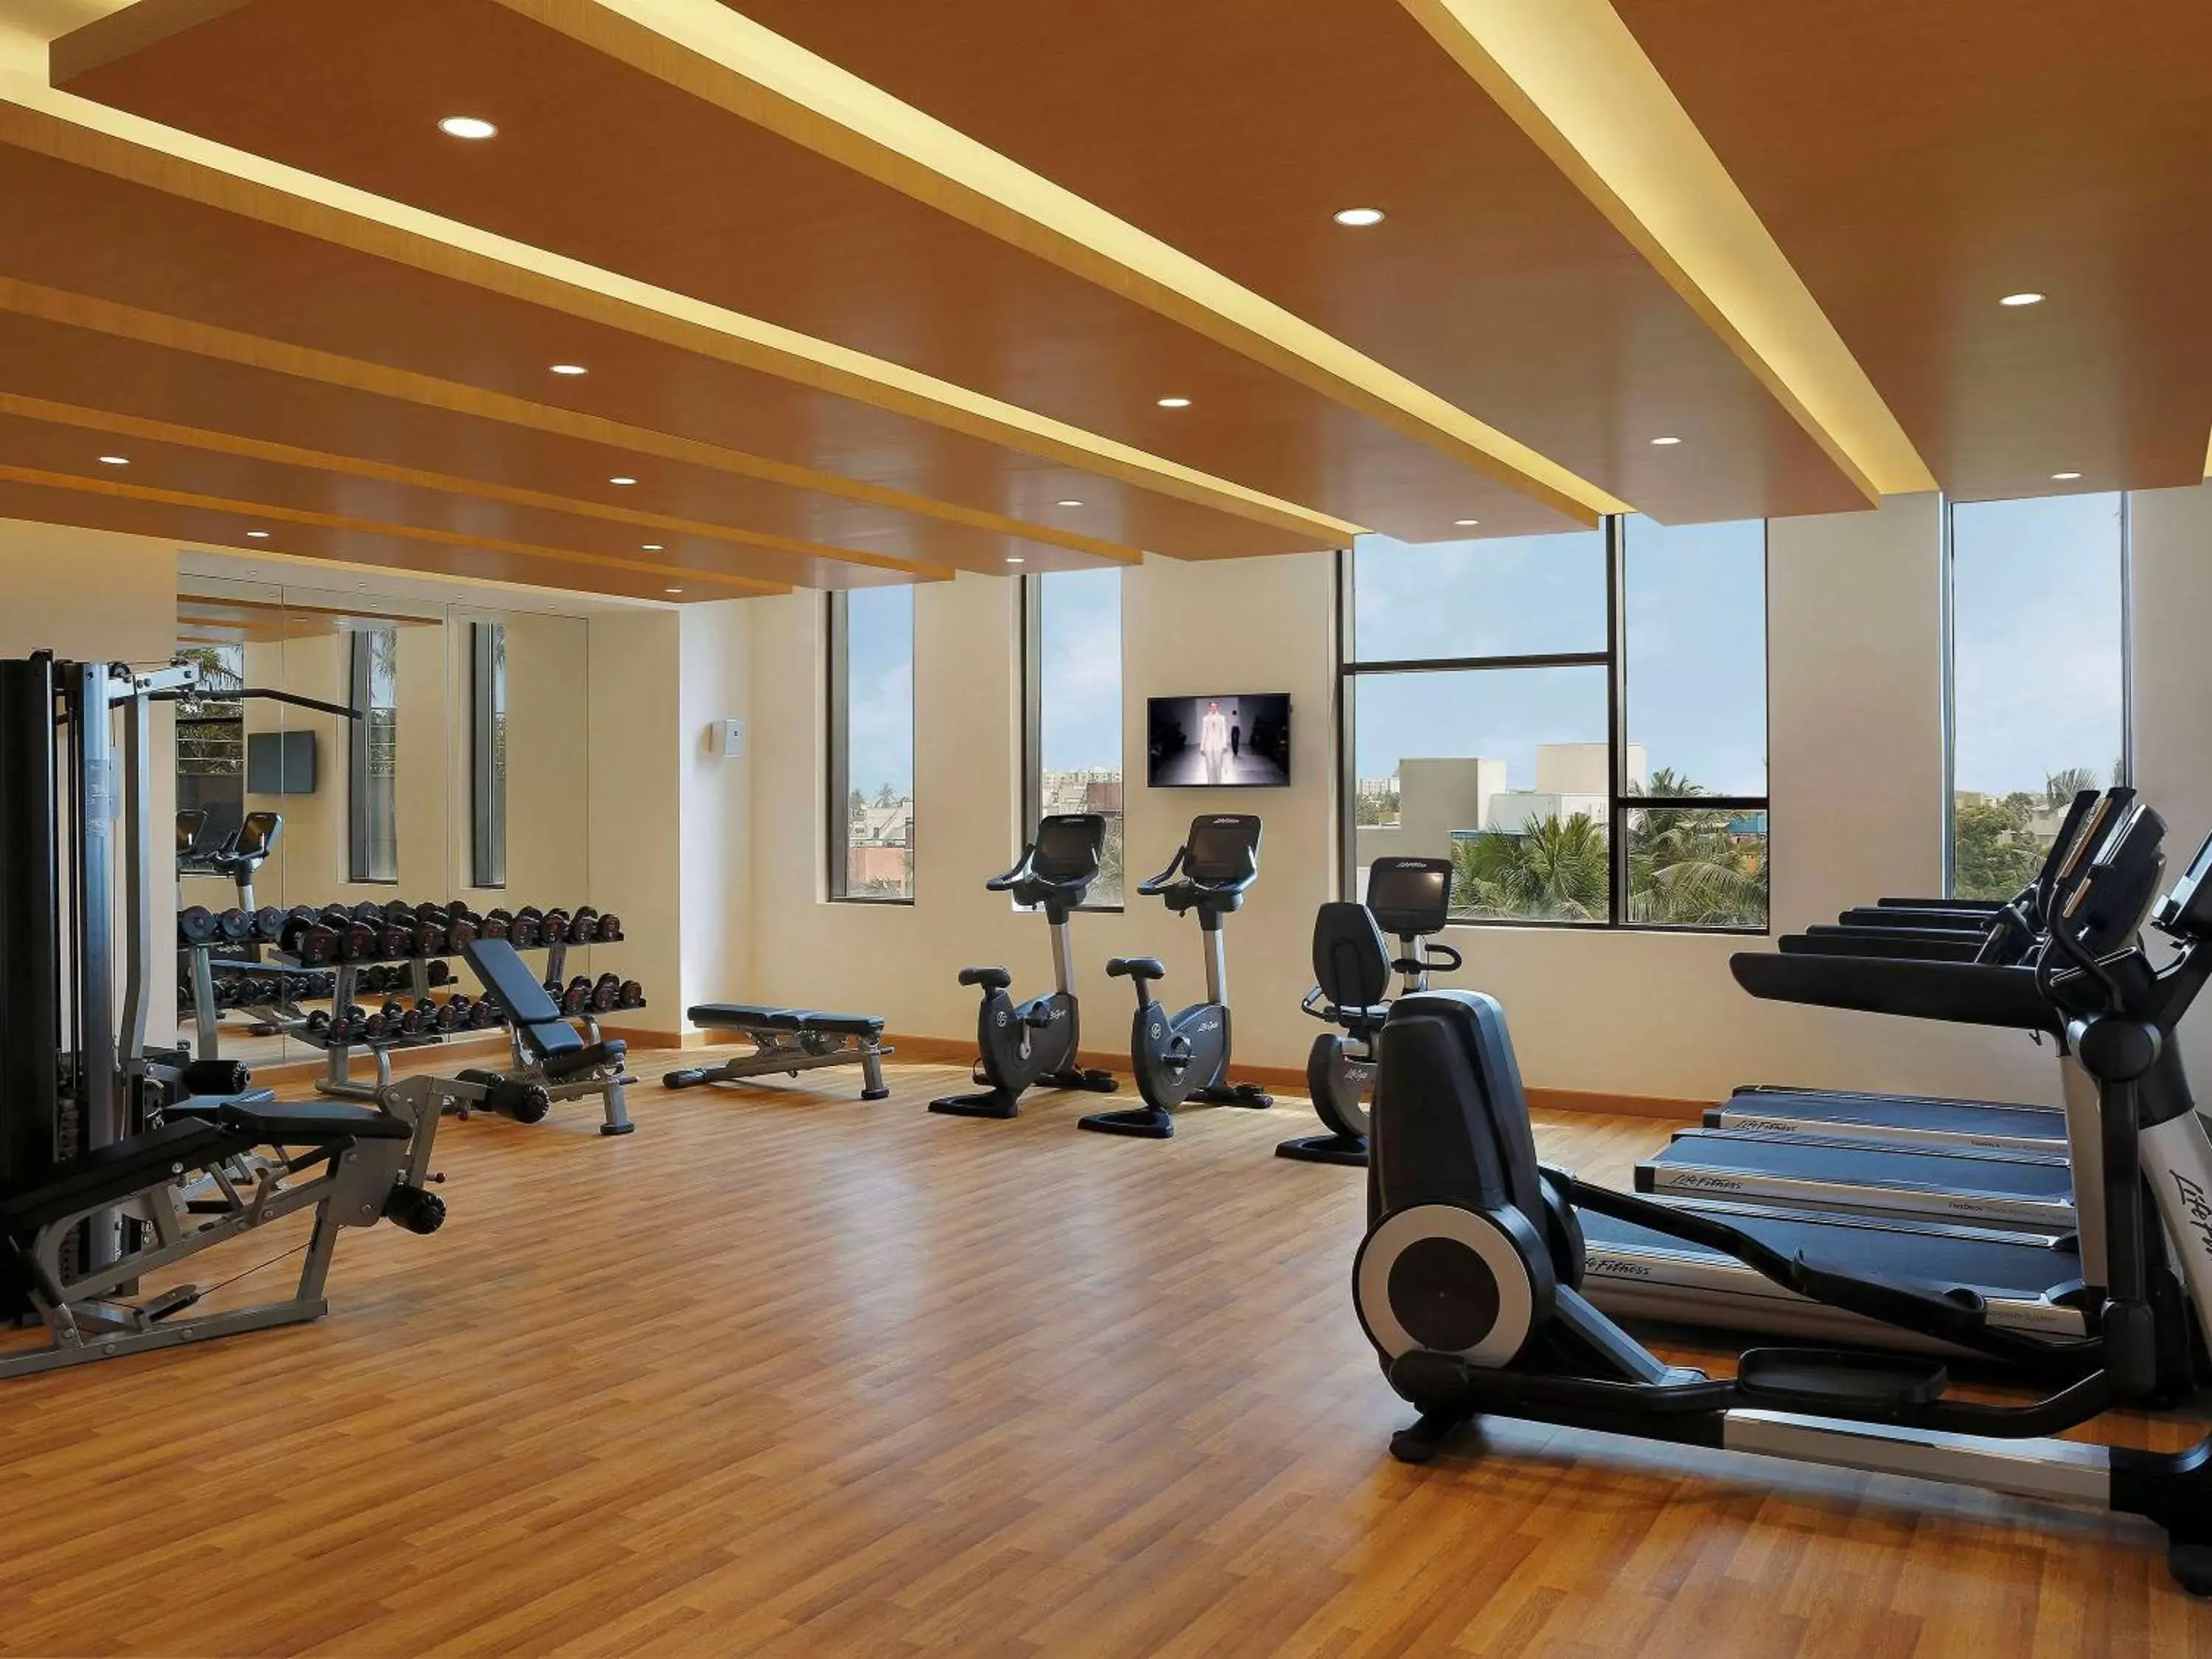 Fitness centre/facilities, Fitness Center/Facilities in Novotel Chennai OMR